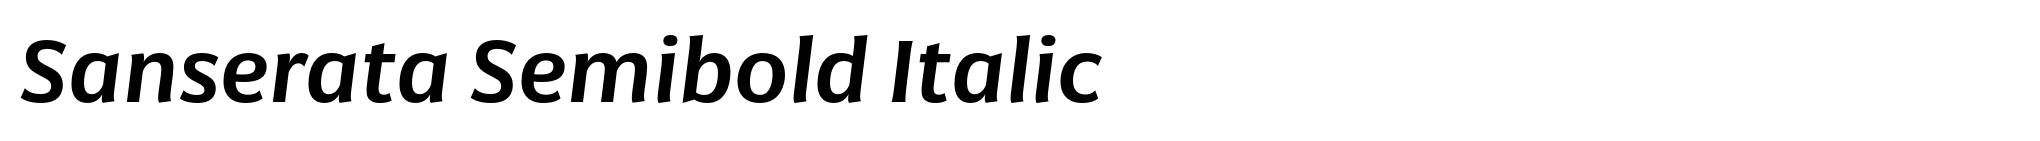 Sanserata Semibold Italic image